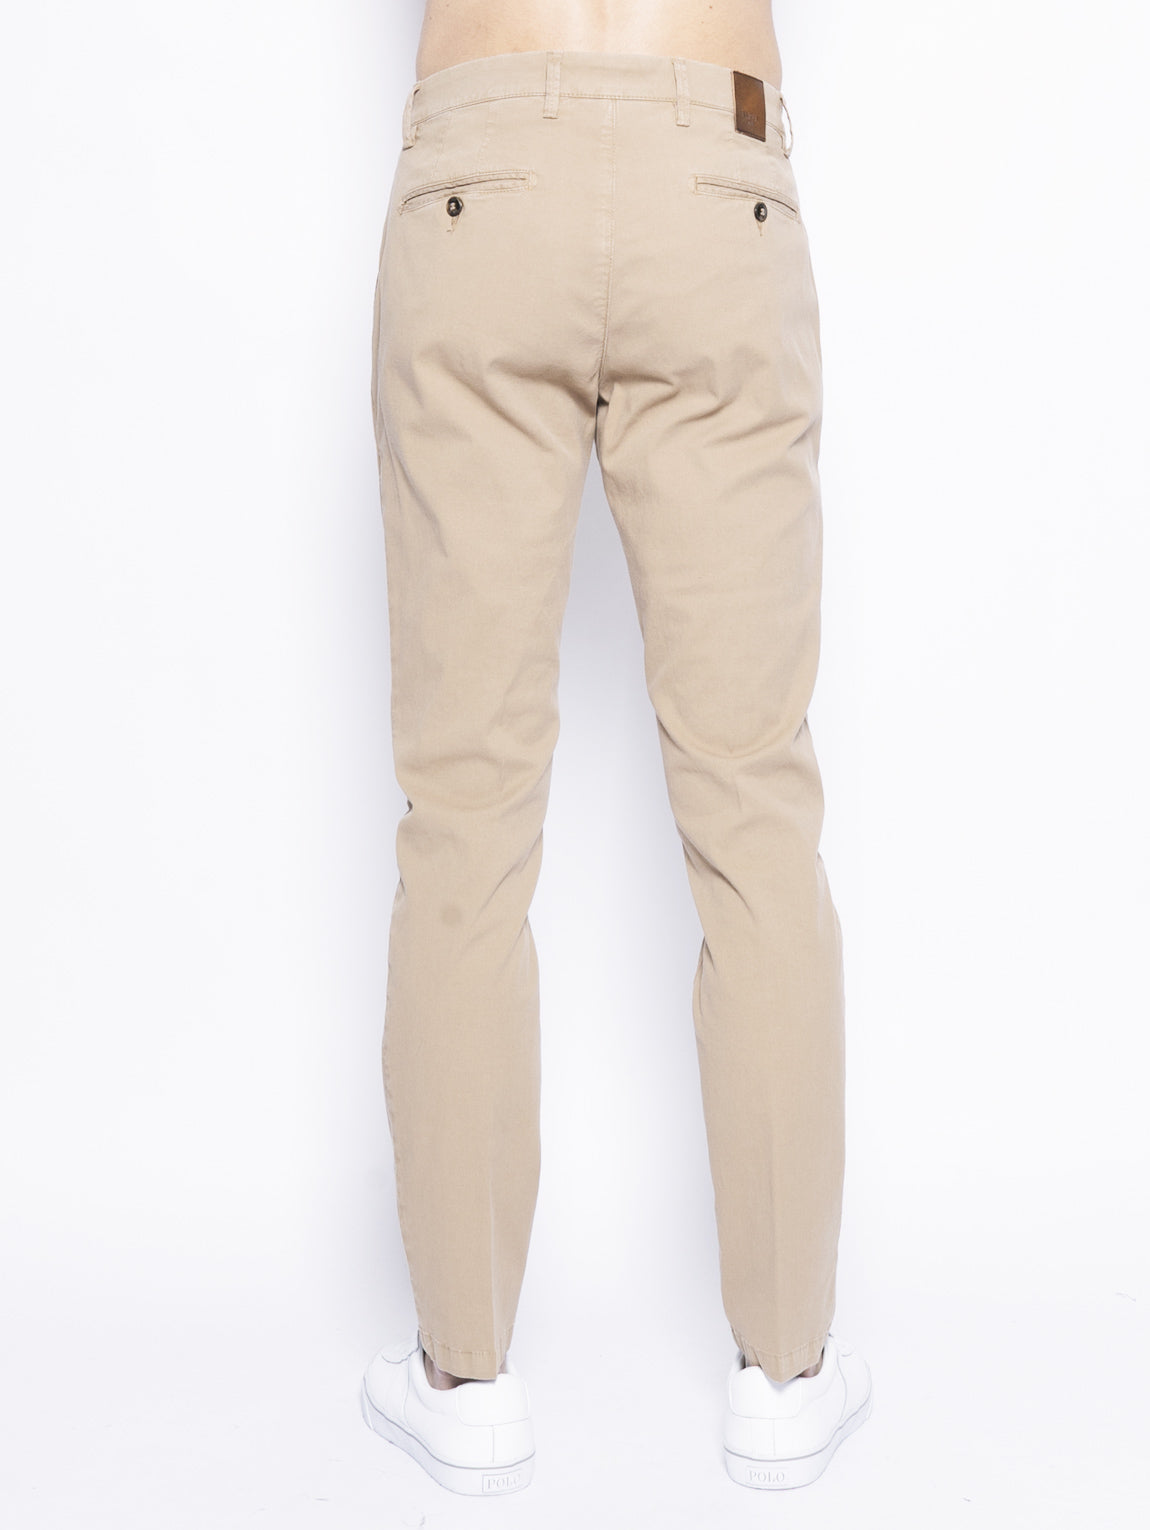 Pantalone chinos - BG05 Biscotto-Pantaloni-Briglia 1949-TRYME Shop